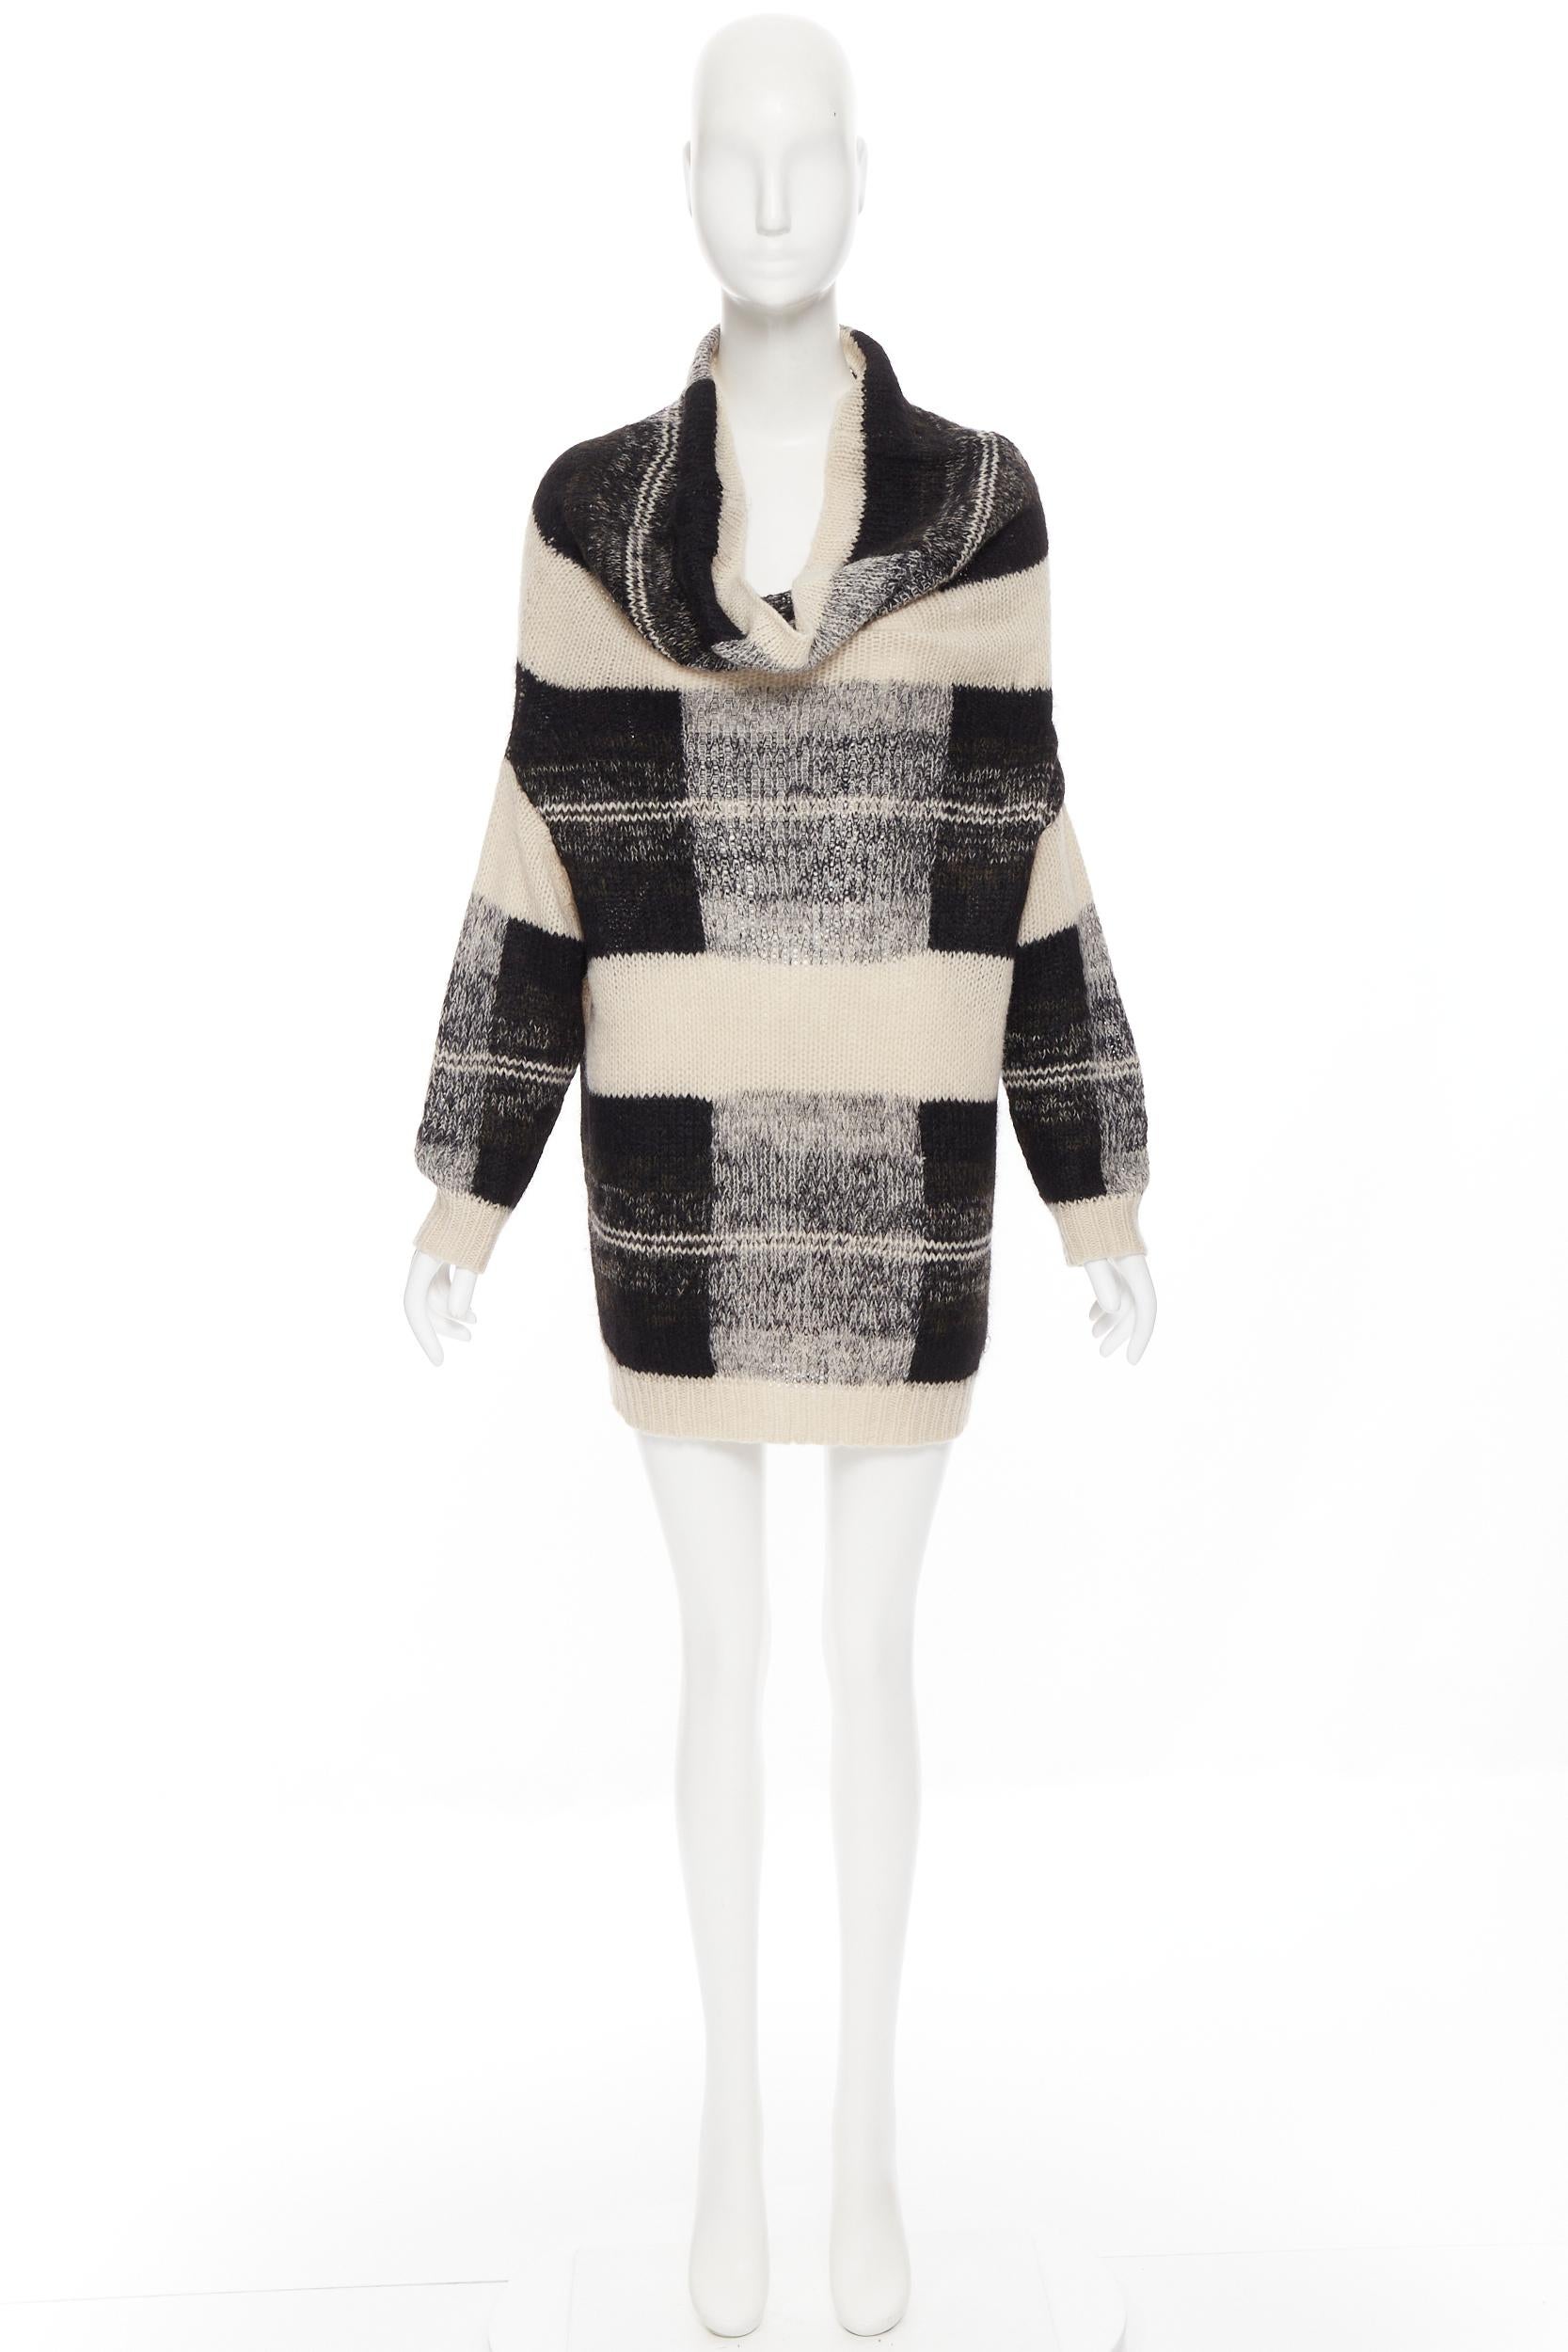 DRIES VAN NOTEN alpaca wool beige black check knit cowl neck sweater dress S 1